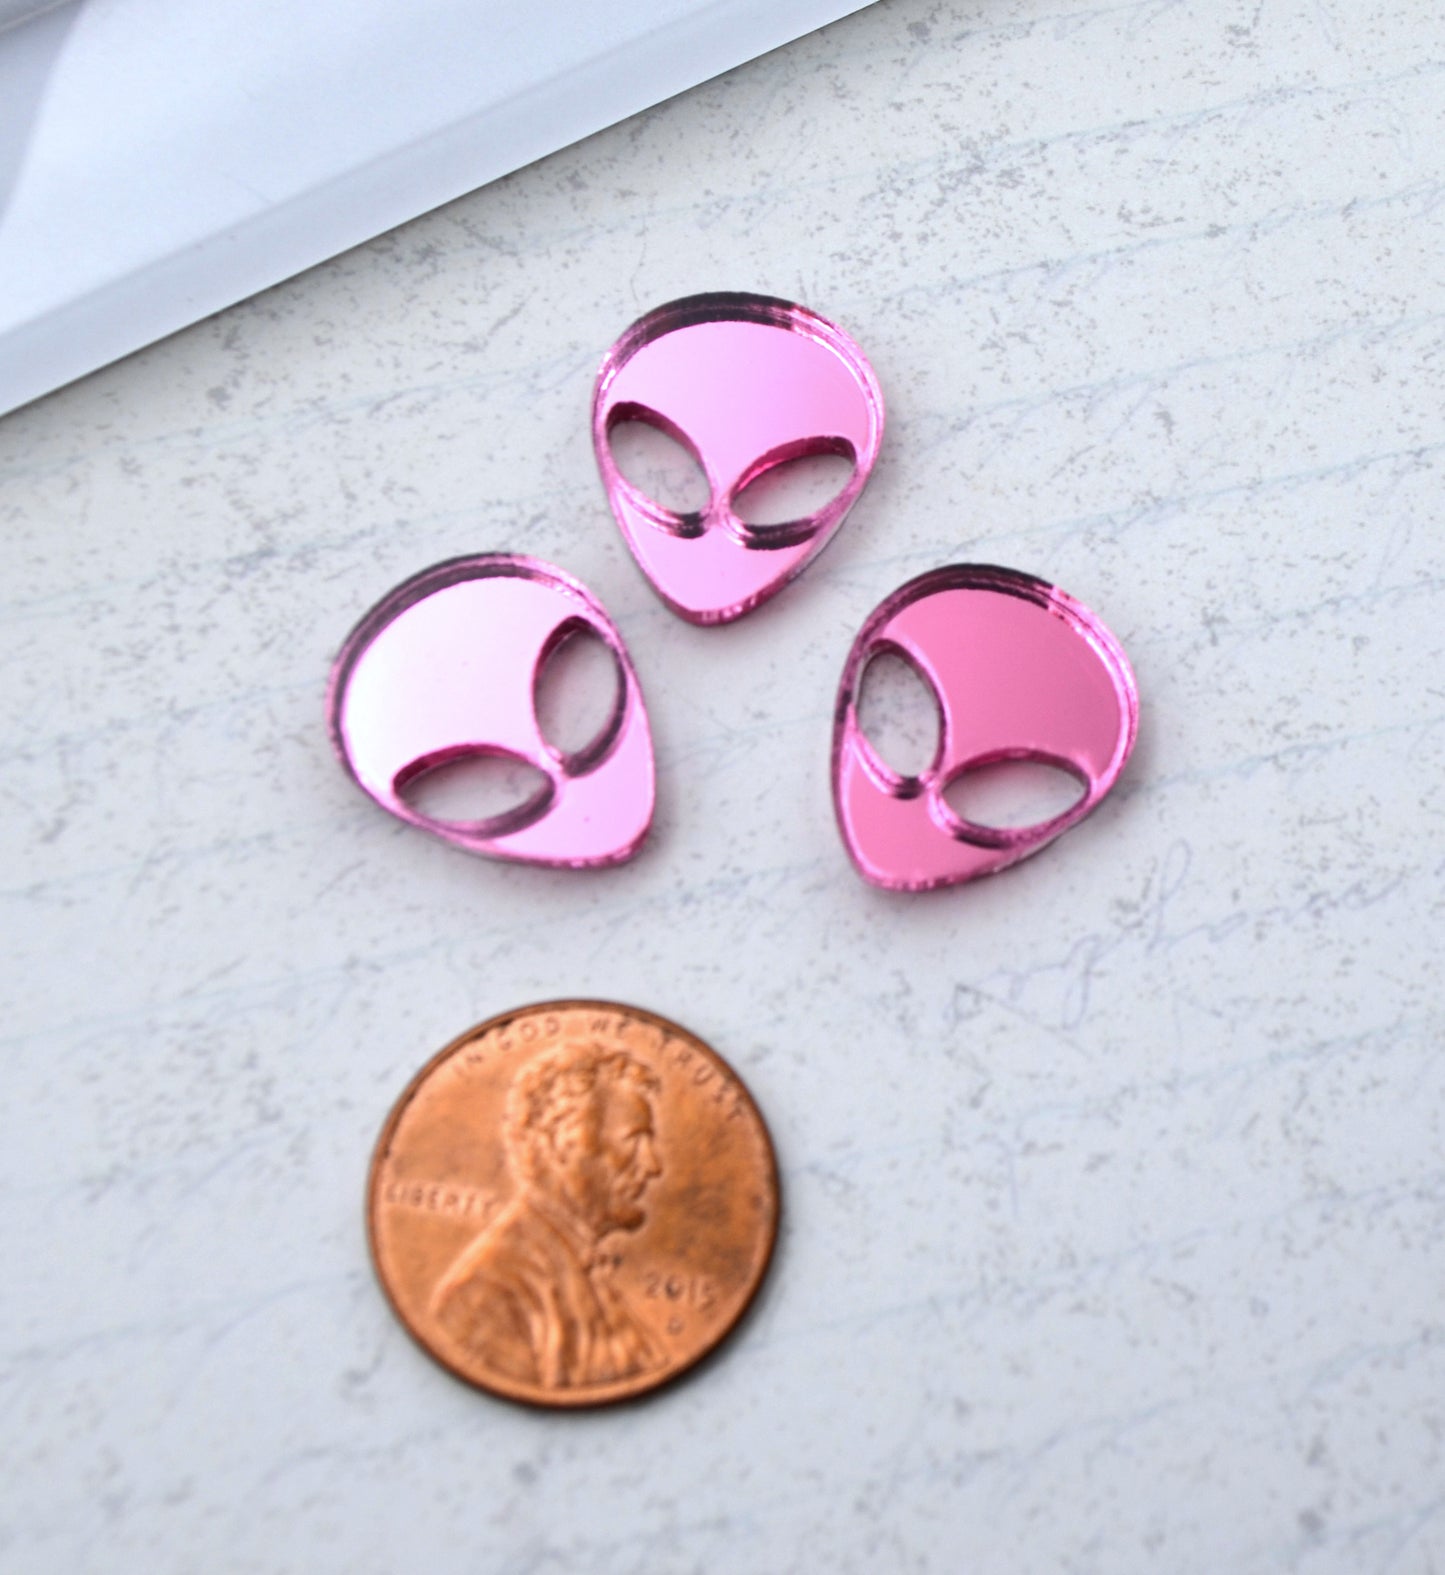 PINK MIRROR ALIENS 3 Pieces Flatback Cabochons In Laser Cut Acrylic